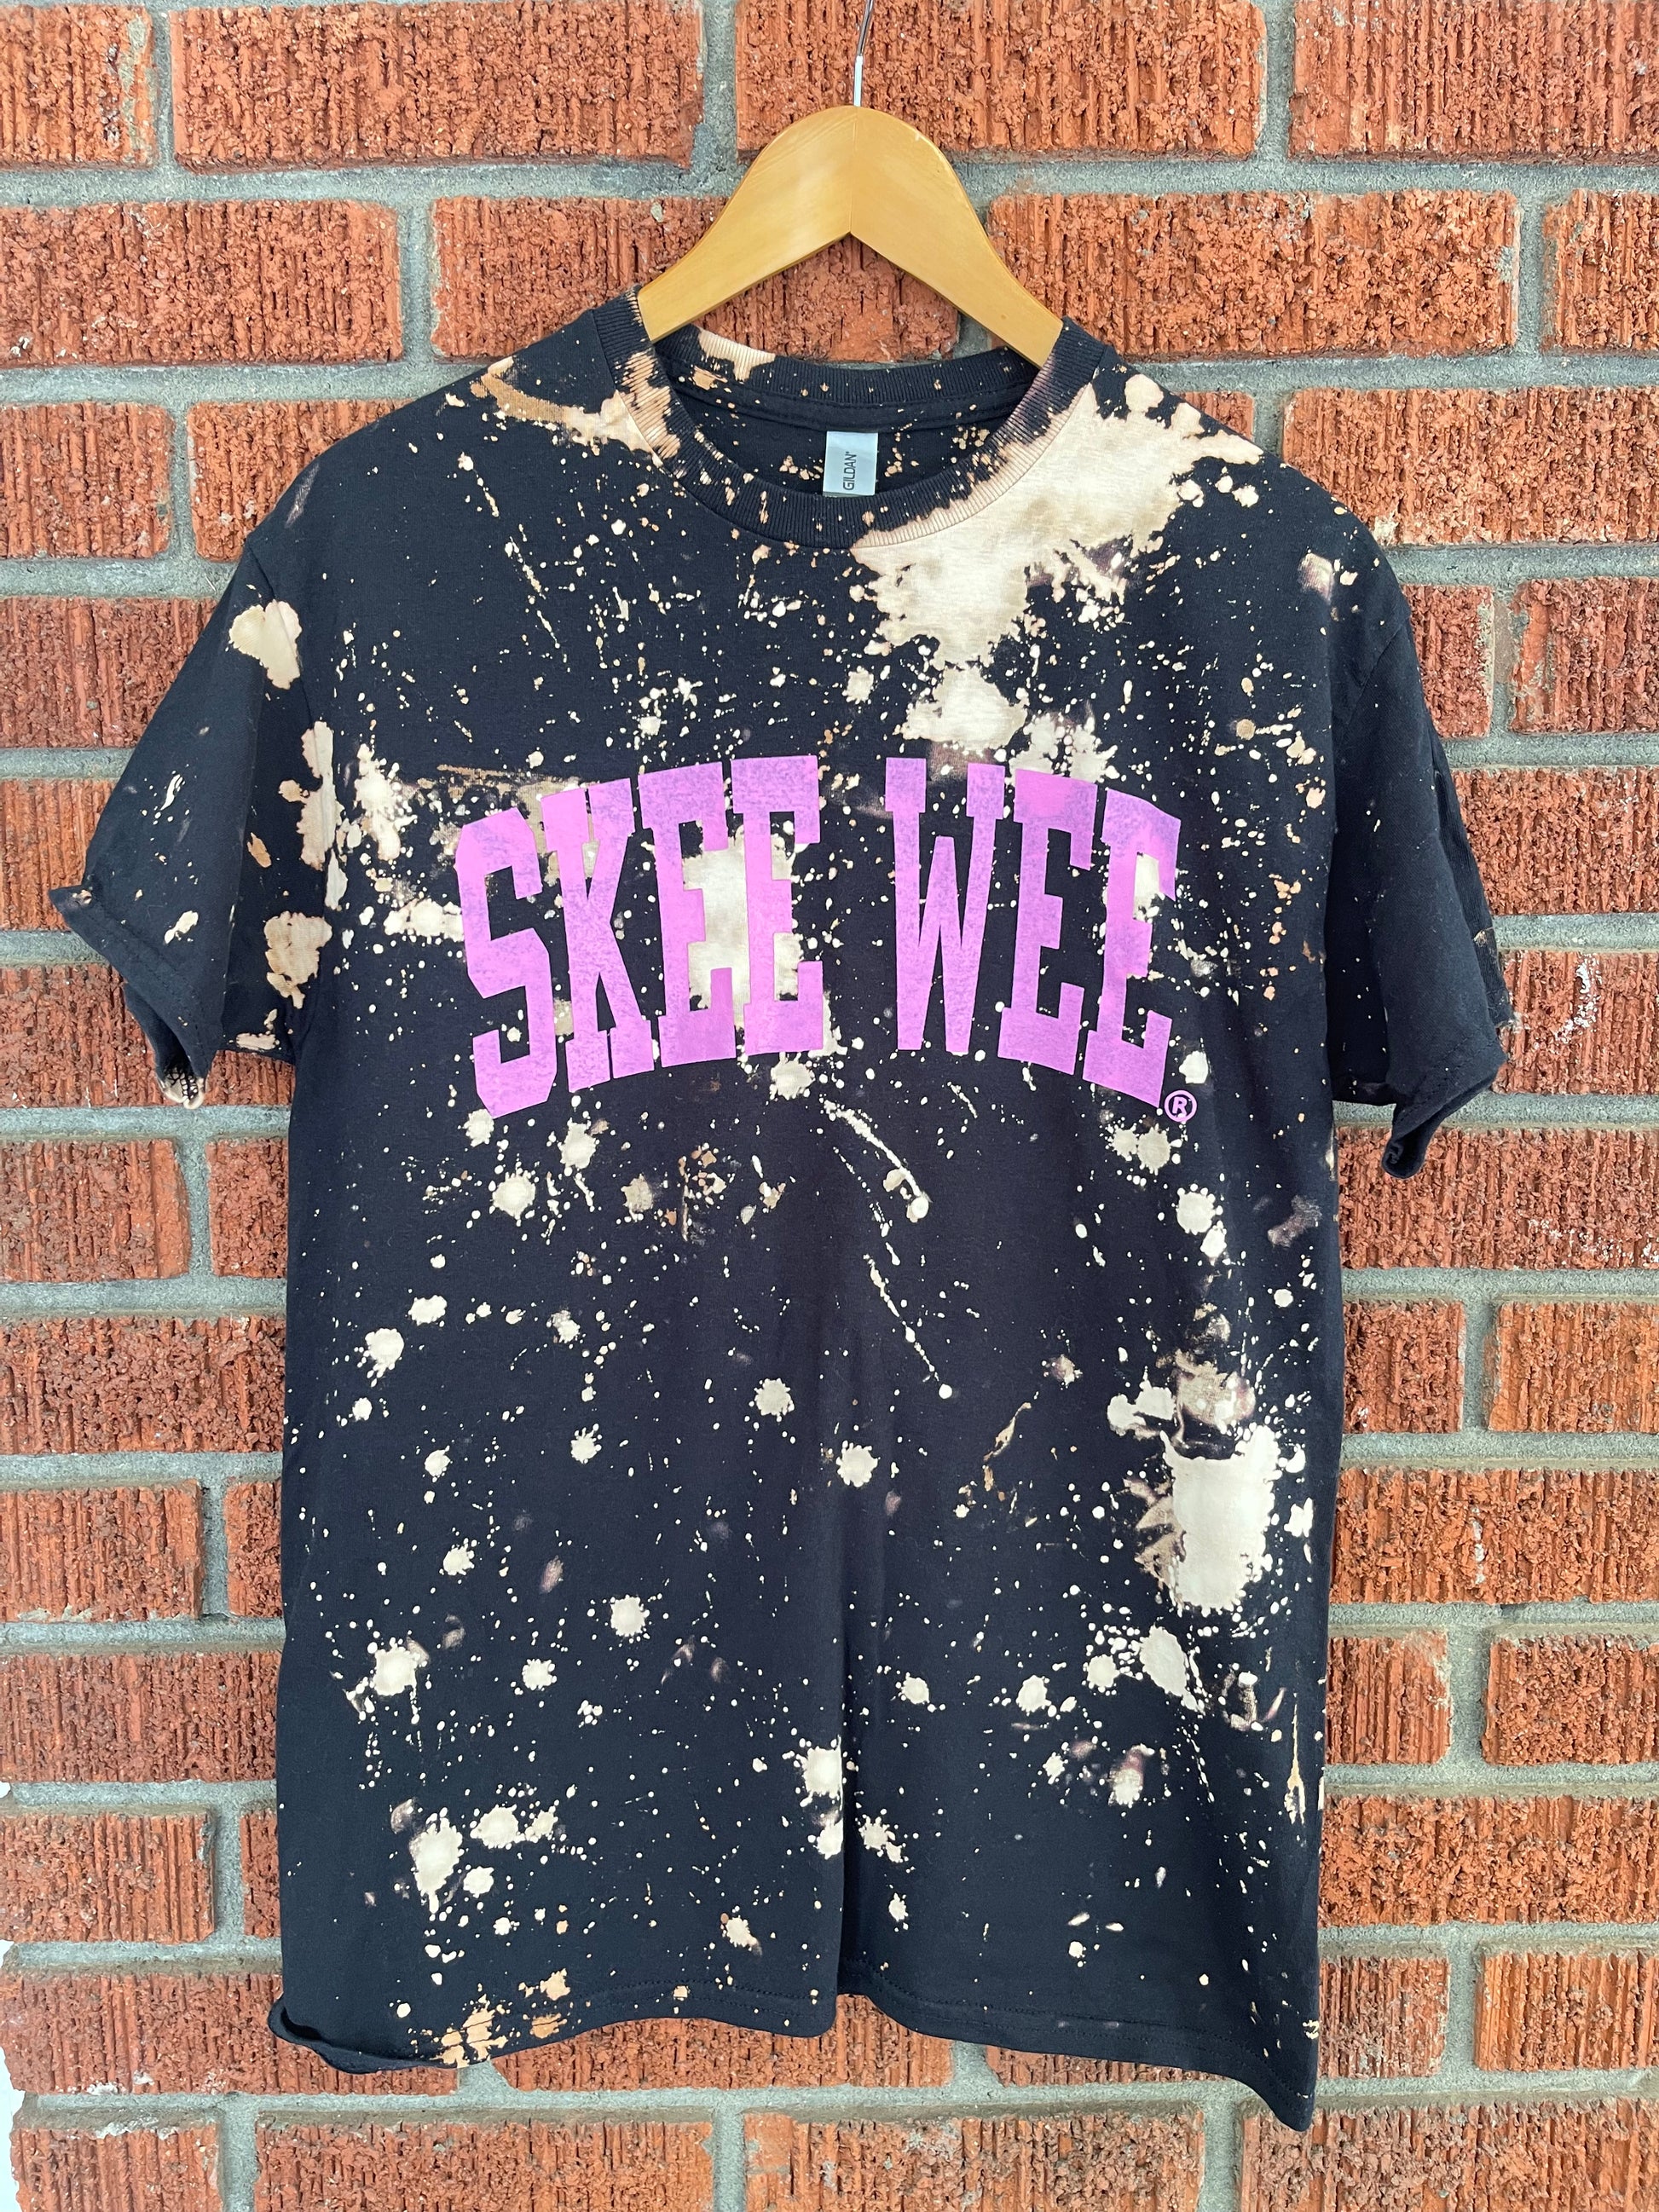 The Black Skee Wee Crew Neck T-shirt - [CCL Designs] - AKA Alpha Kappa Alpha Pink and Green handmade hand bleach tie dye